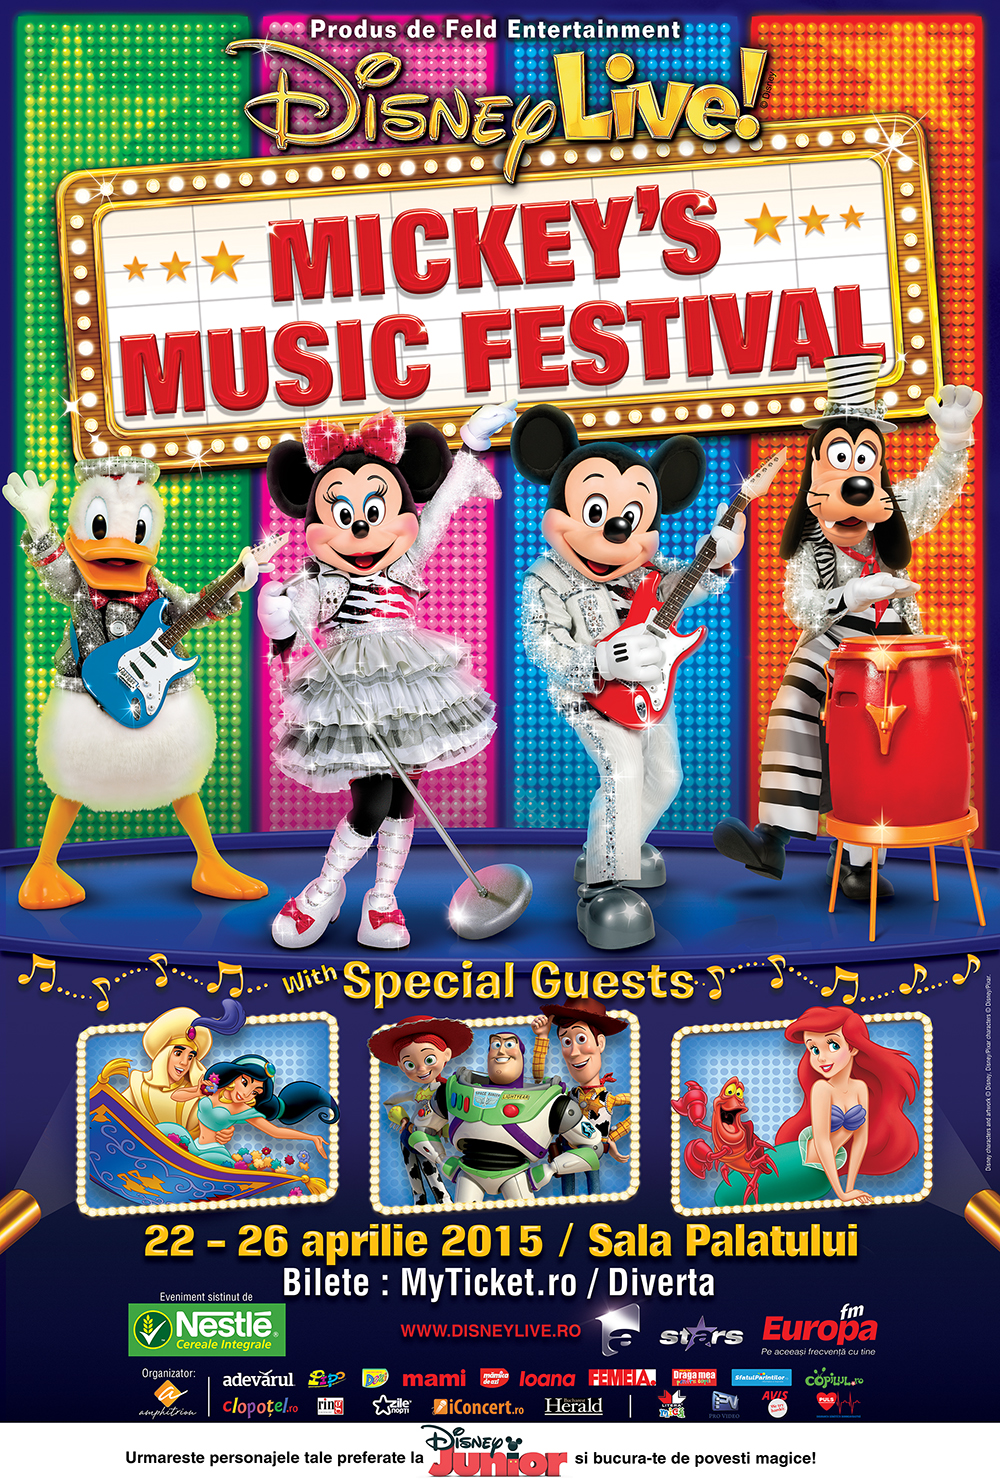 Noua mega-productie, Disney Live! Mickey’s Music Festival, vine la Bucuresti!